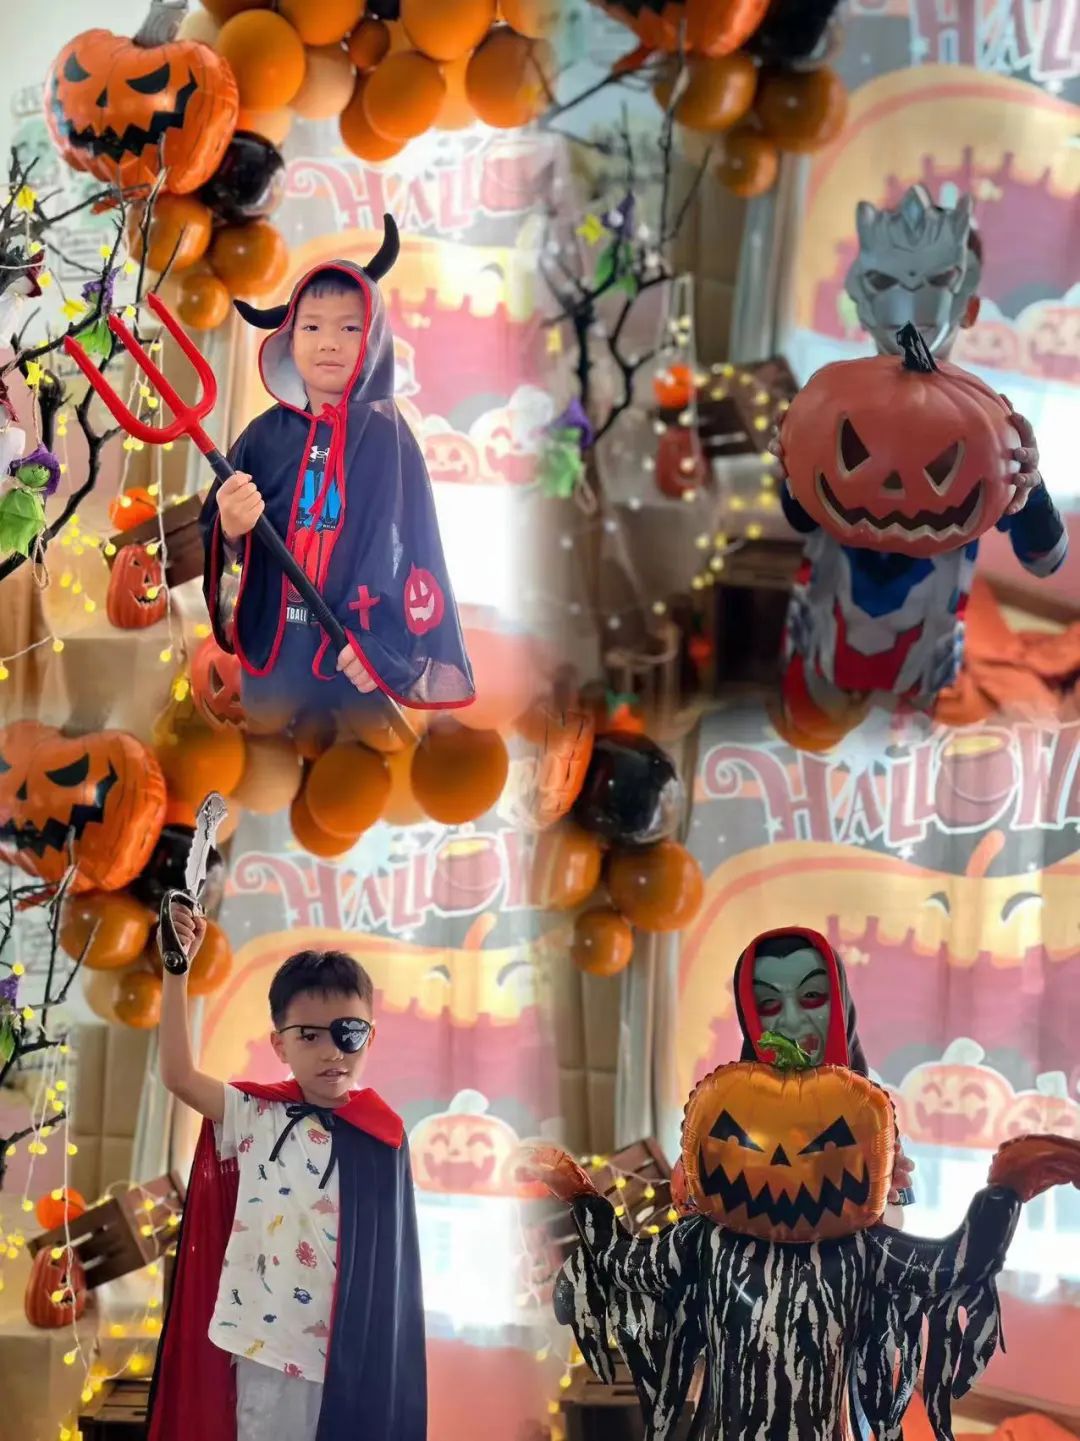 FPIK国际班奇幻周回顾 | Welcome to K3E’s Halloween Party